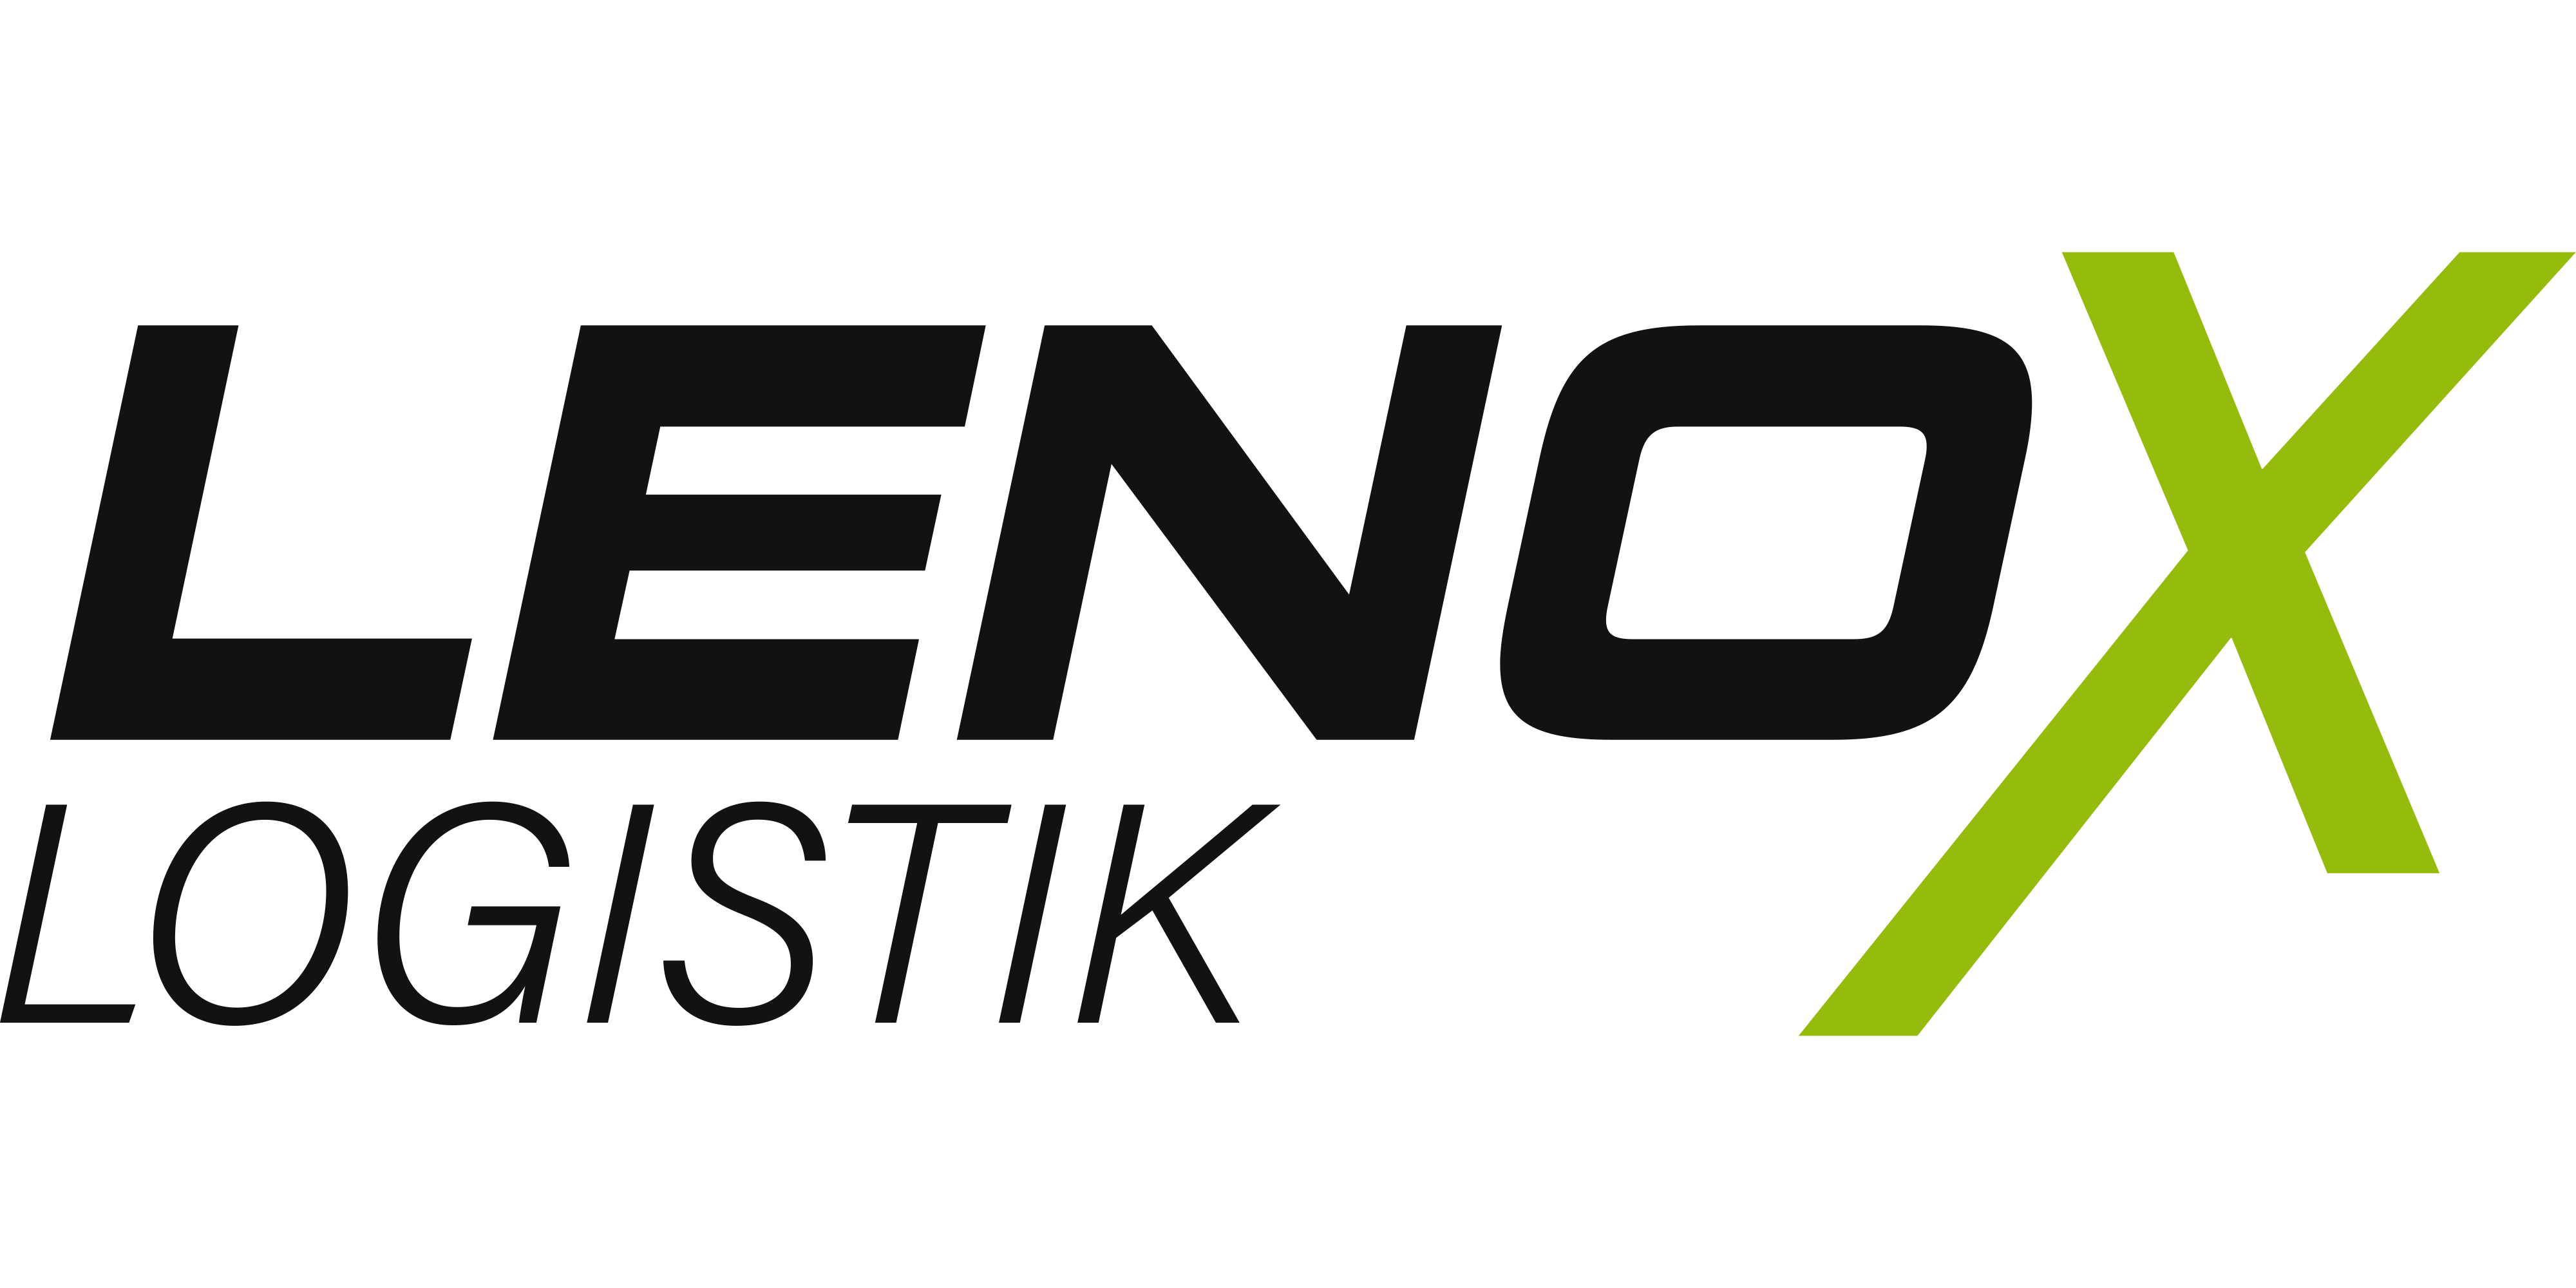 Lenox Logistik GmbH